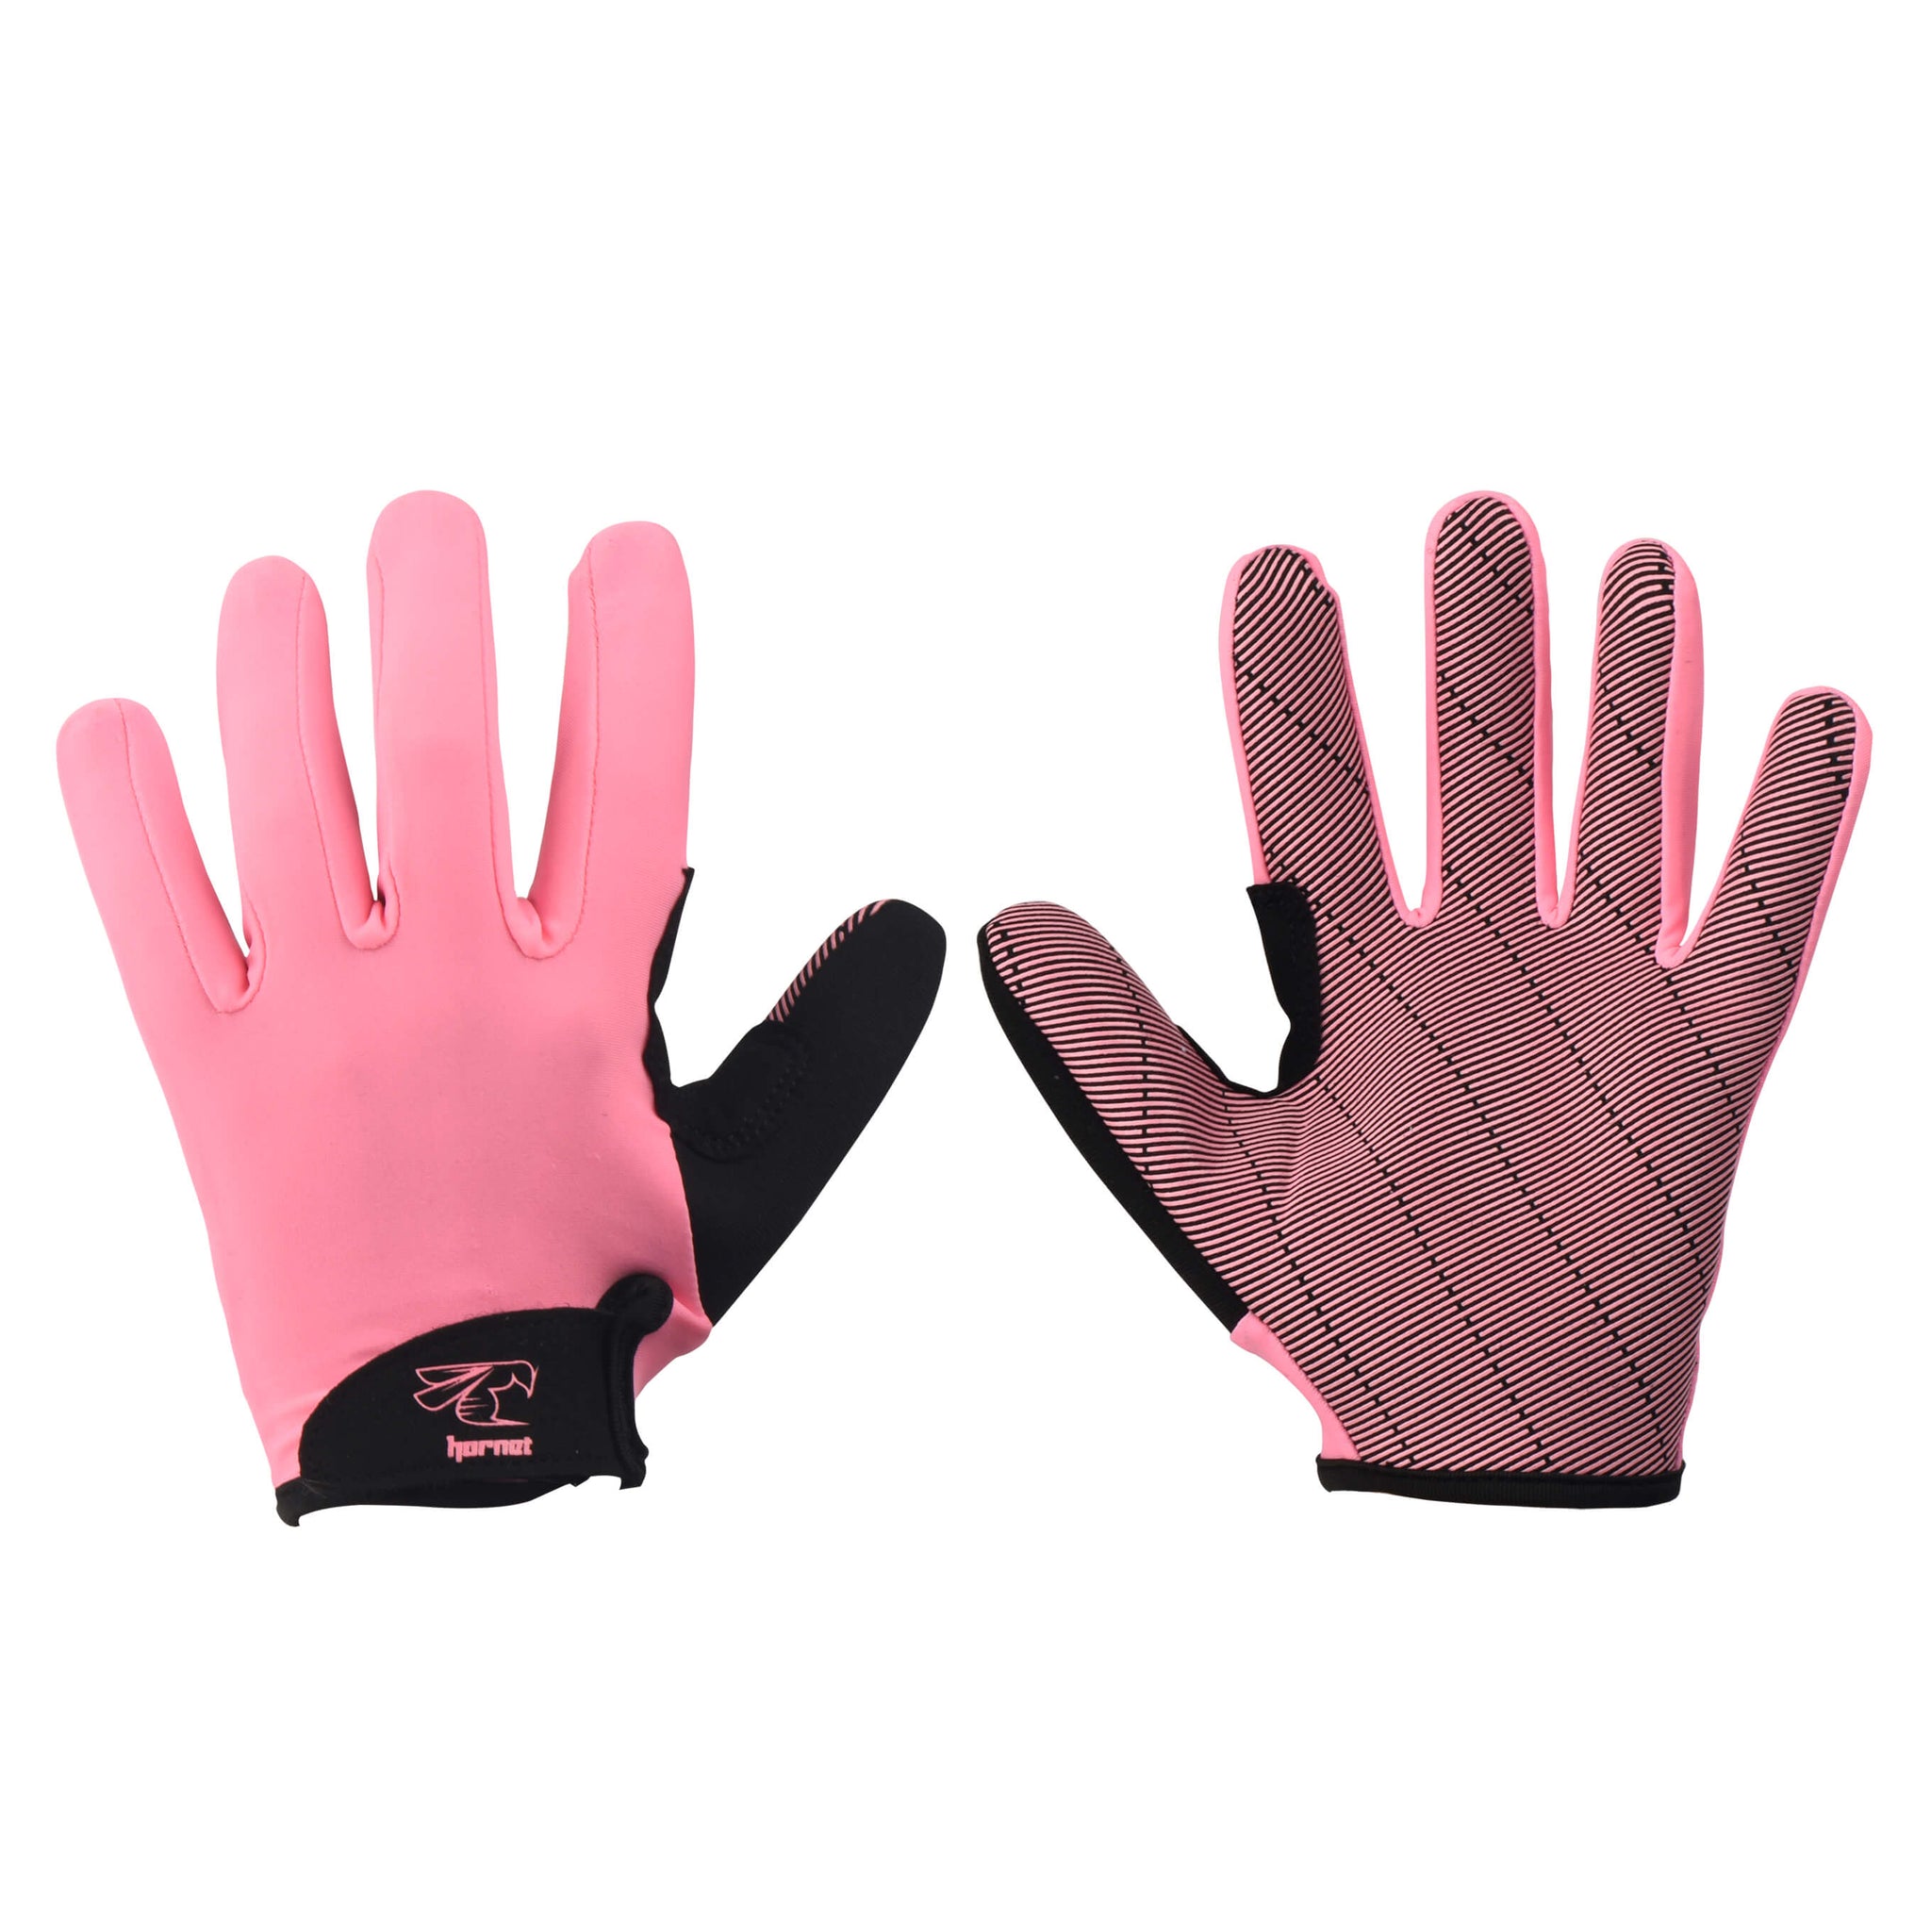 FitsT4 Kayaking Gloves 3/4 Or Full Finger Padded Palm Fingerless Gloves For  Men Women Youth Perfect For Sailing Paddling Canoeing Boating Workout